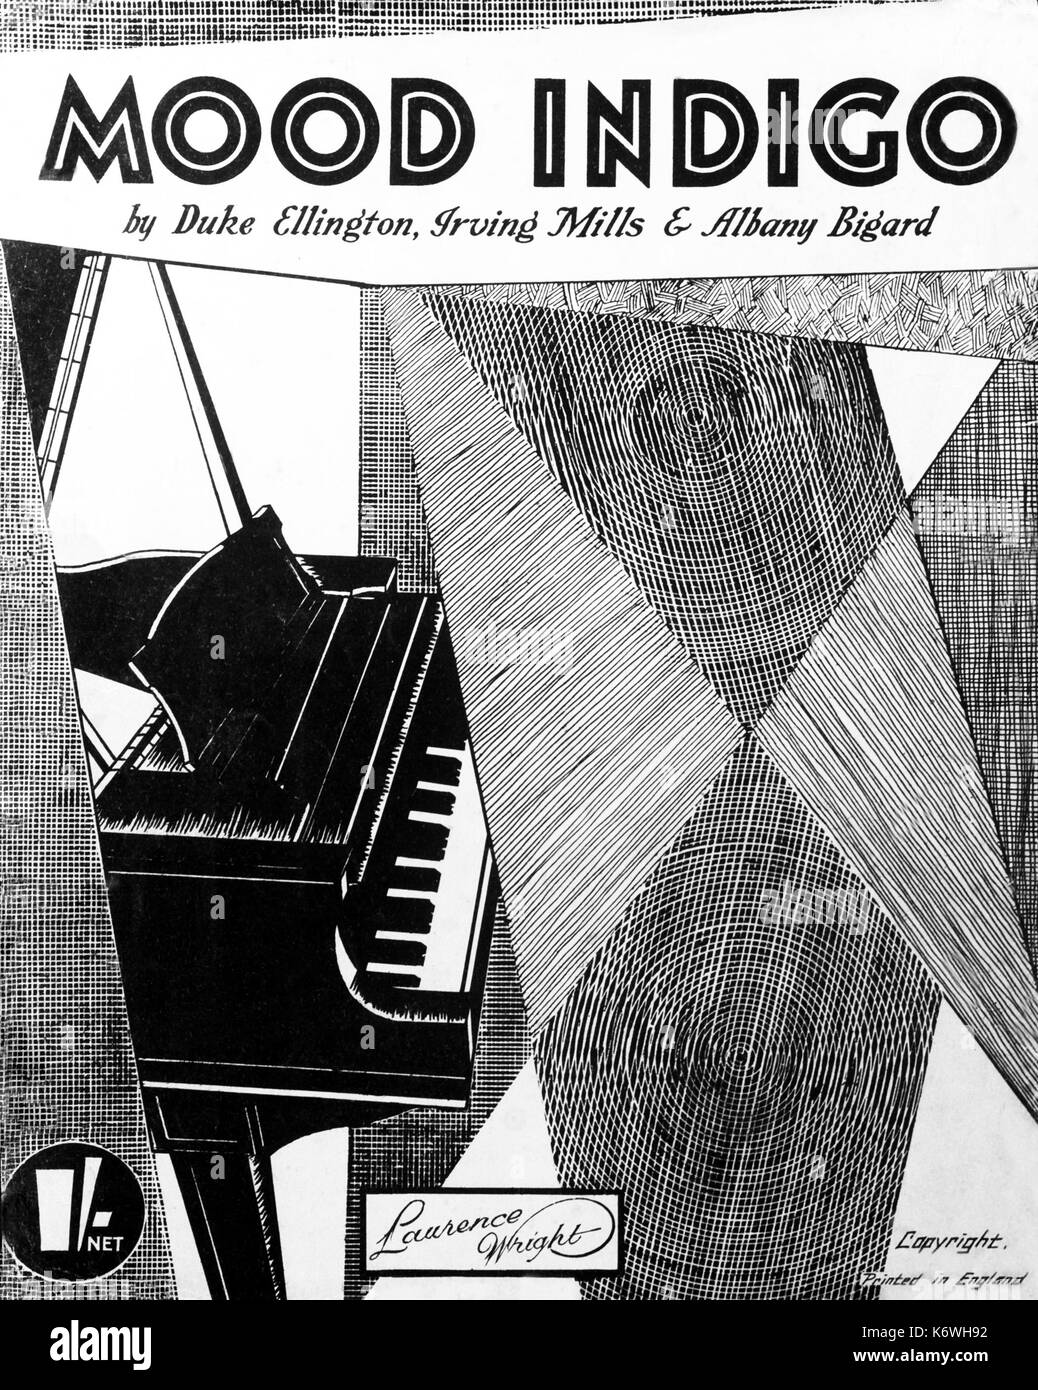 Duke Ellington, - Mood Indigo score Abdeckung komponiert von Duke Ellington, Irving Mills & Albany bigard. Pub. London, Lawrence Wright Musik Co, Datum nicht bekannt. Jazz, Klavier. Design. Stockfoto